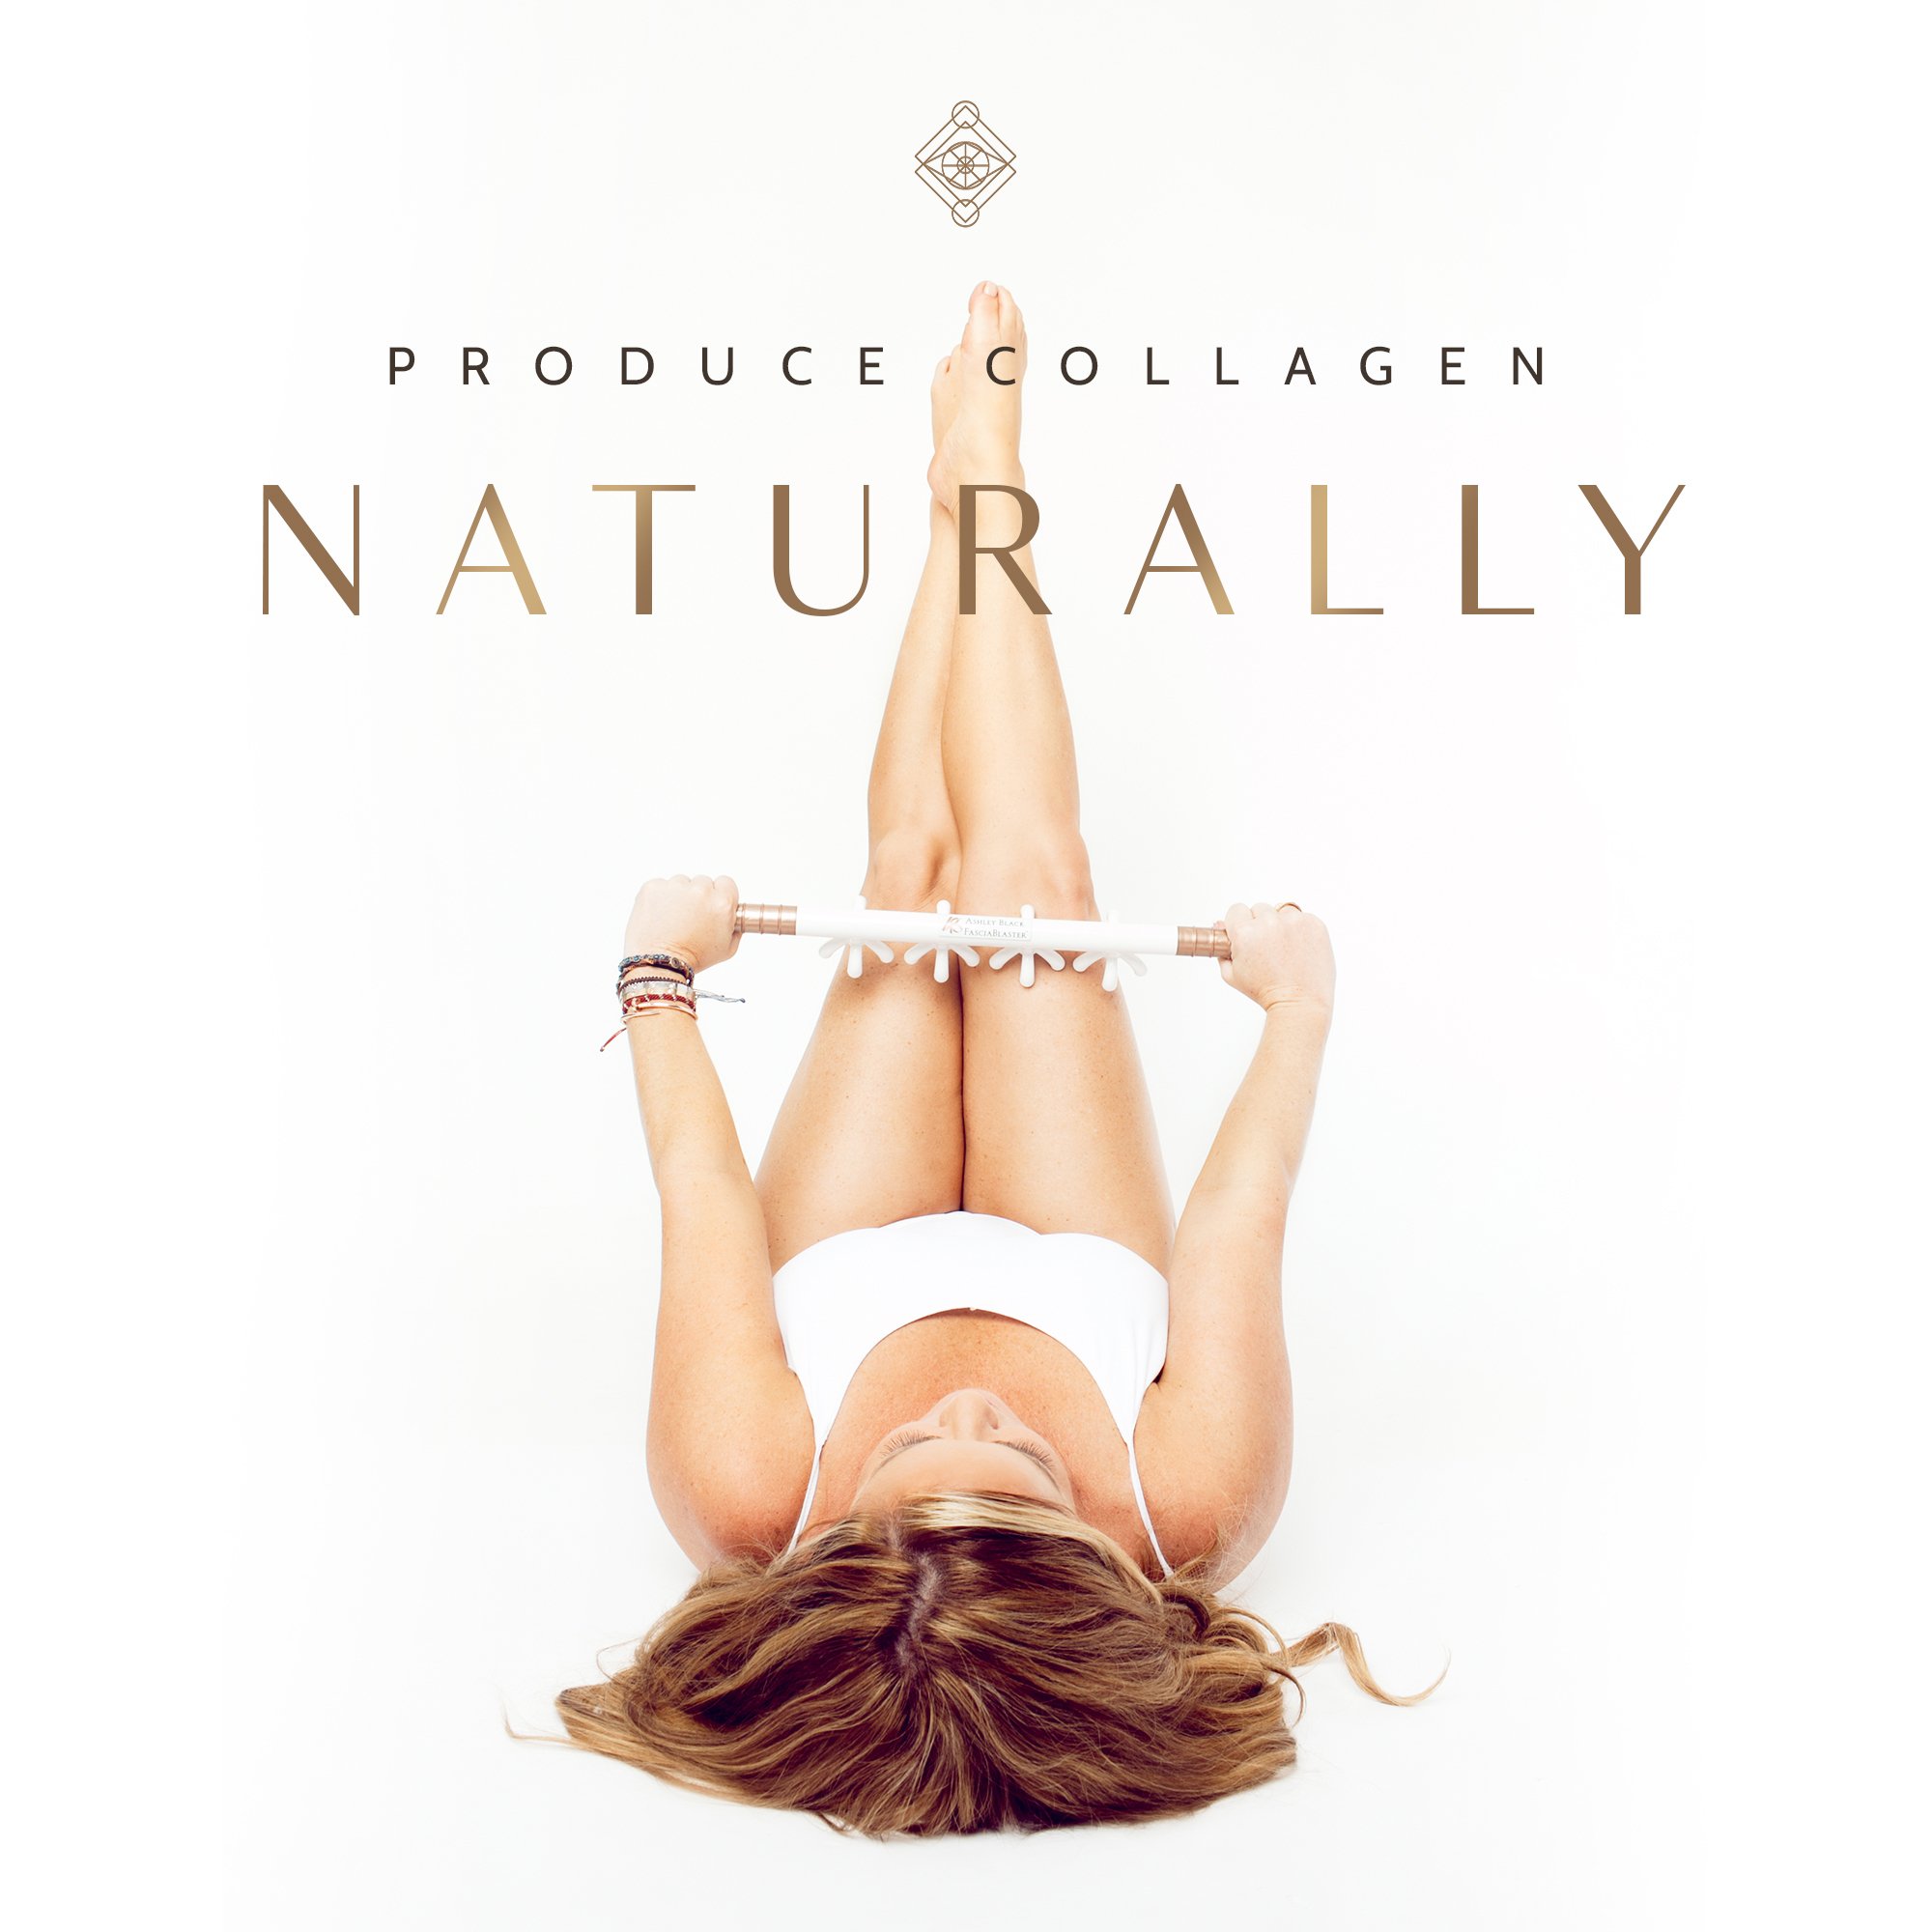 Produce Collagen Naturally v4-1 (1) (1)